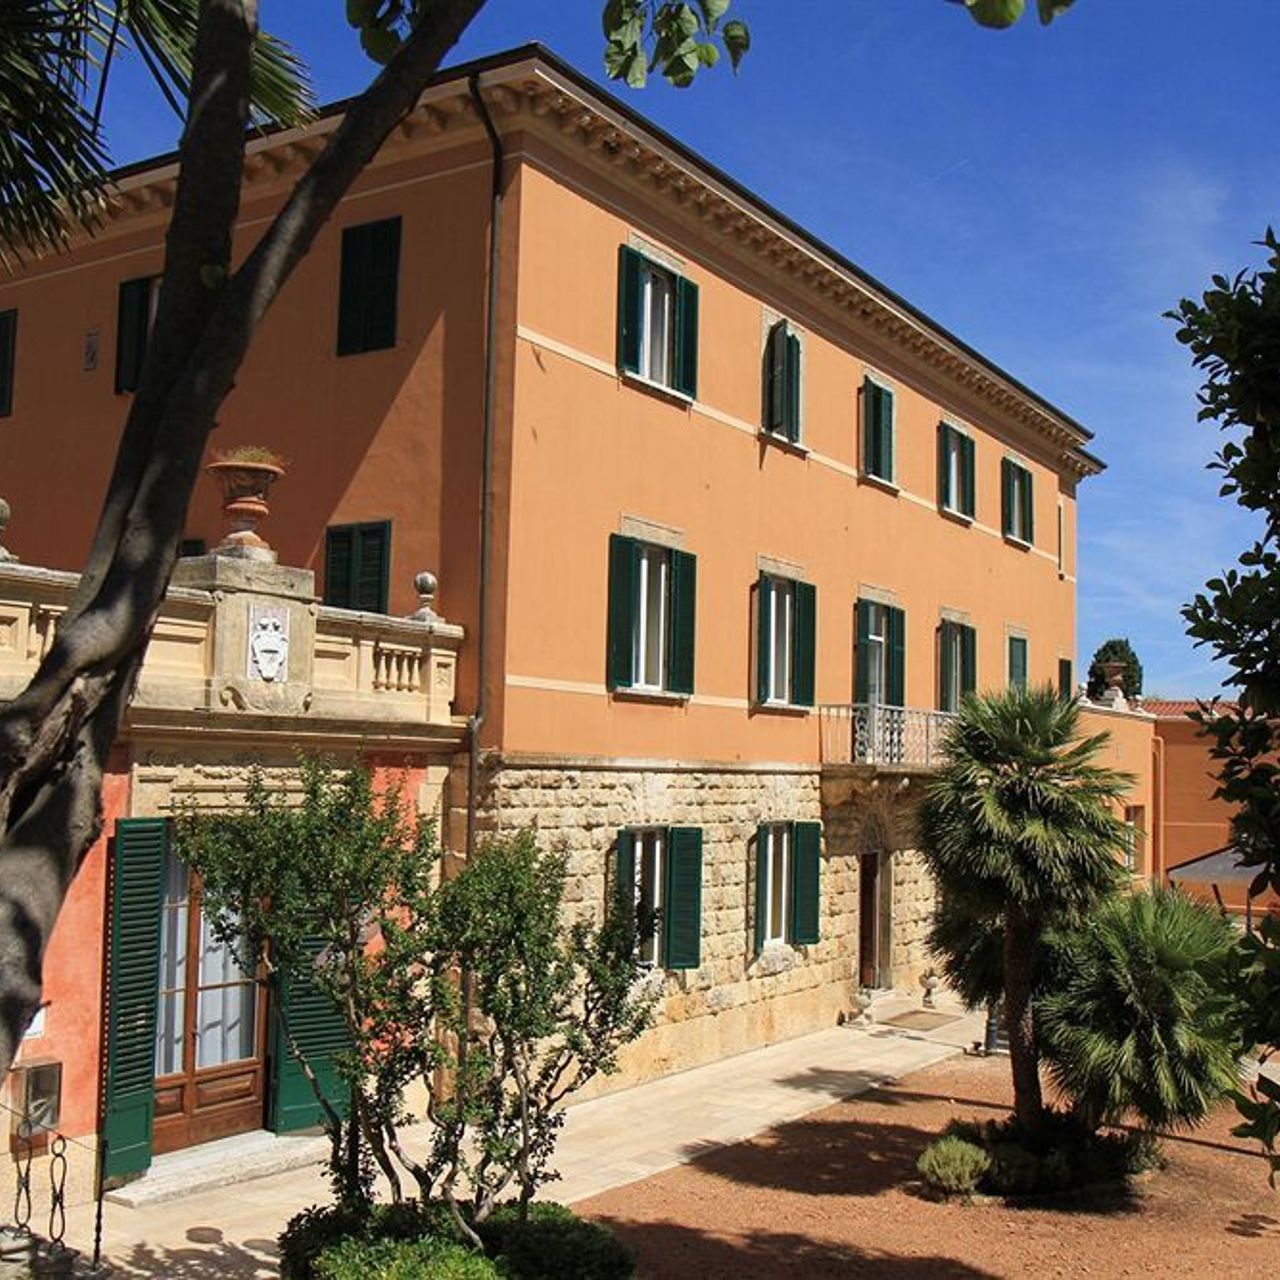 Hotel Villa Margherita - Casciana Terme - Great prices at HOTEL INFO